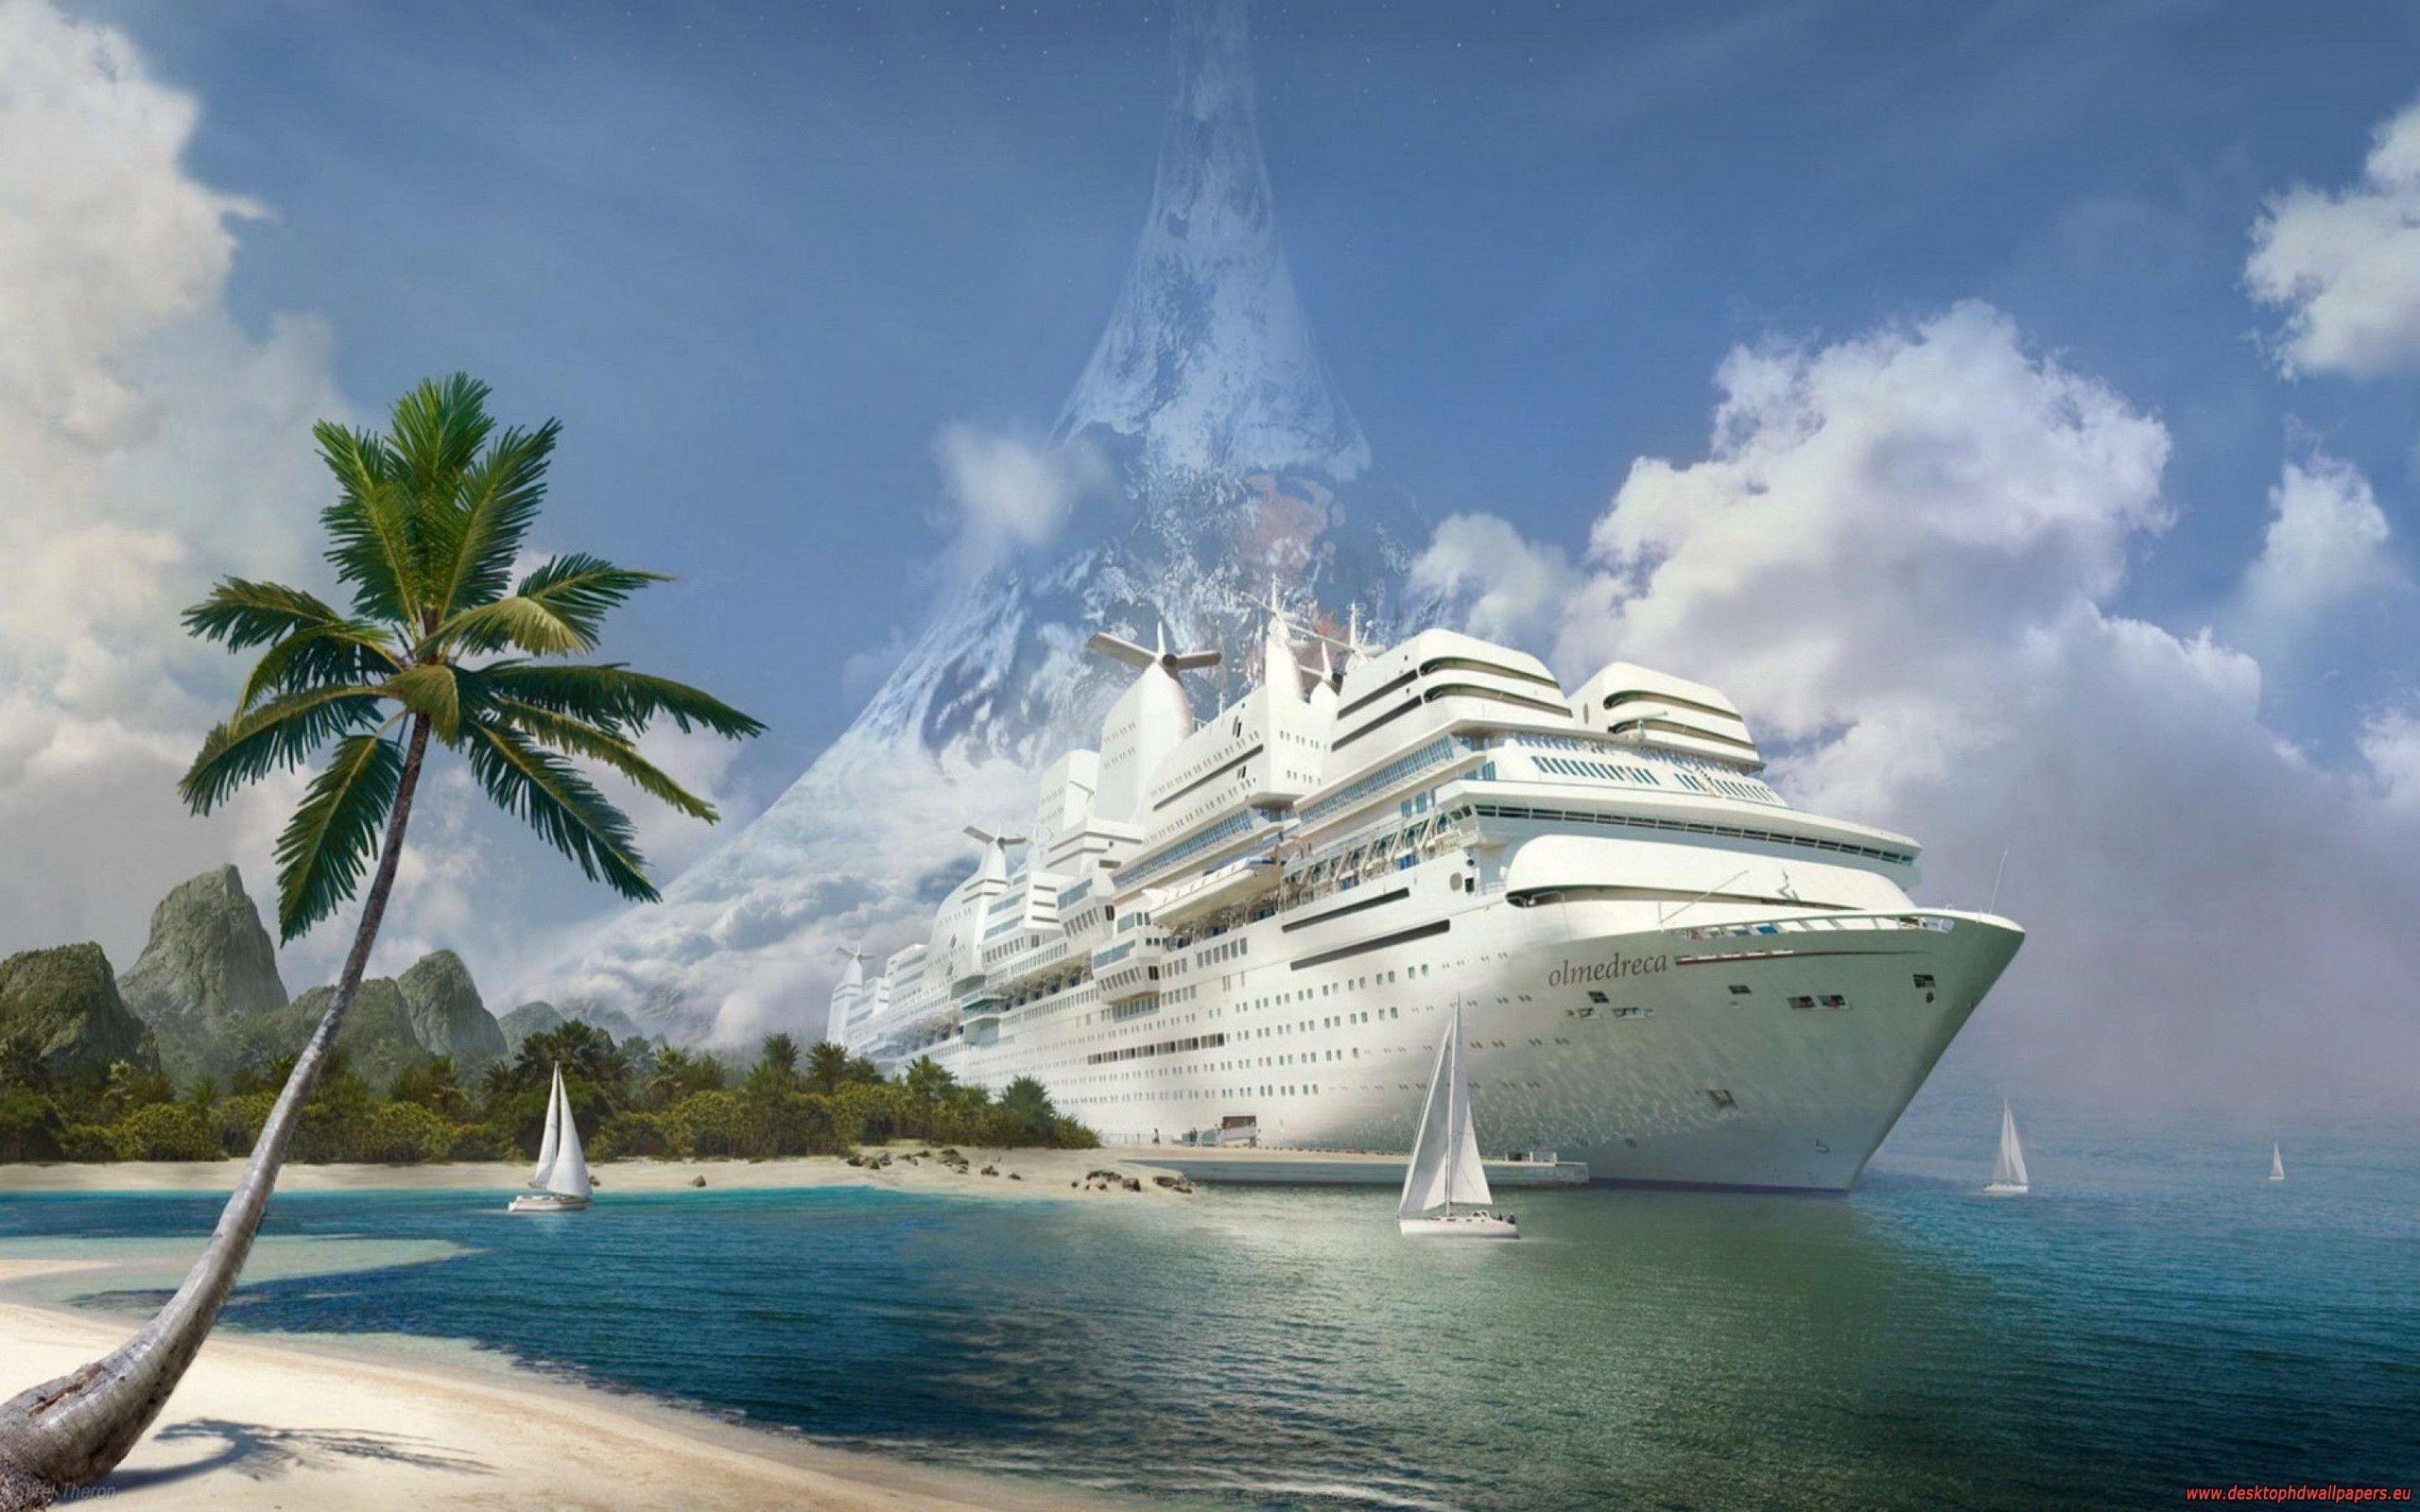 Olmedreca luxury cruise ship wallpaper in 2560×1600 resolution